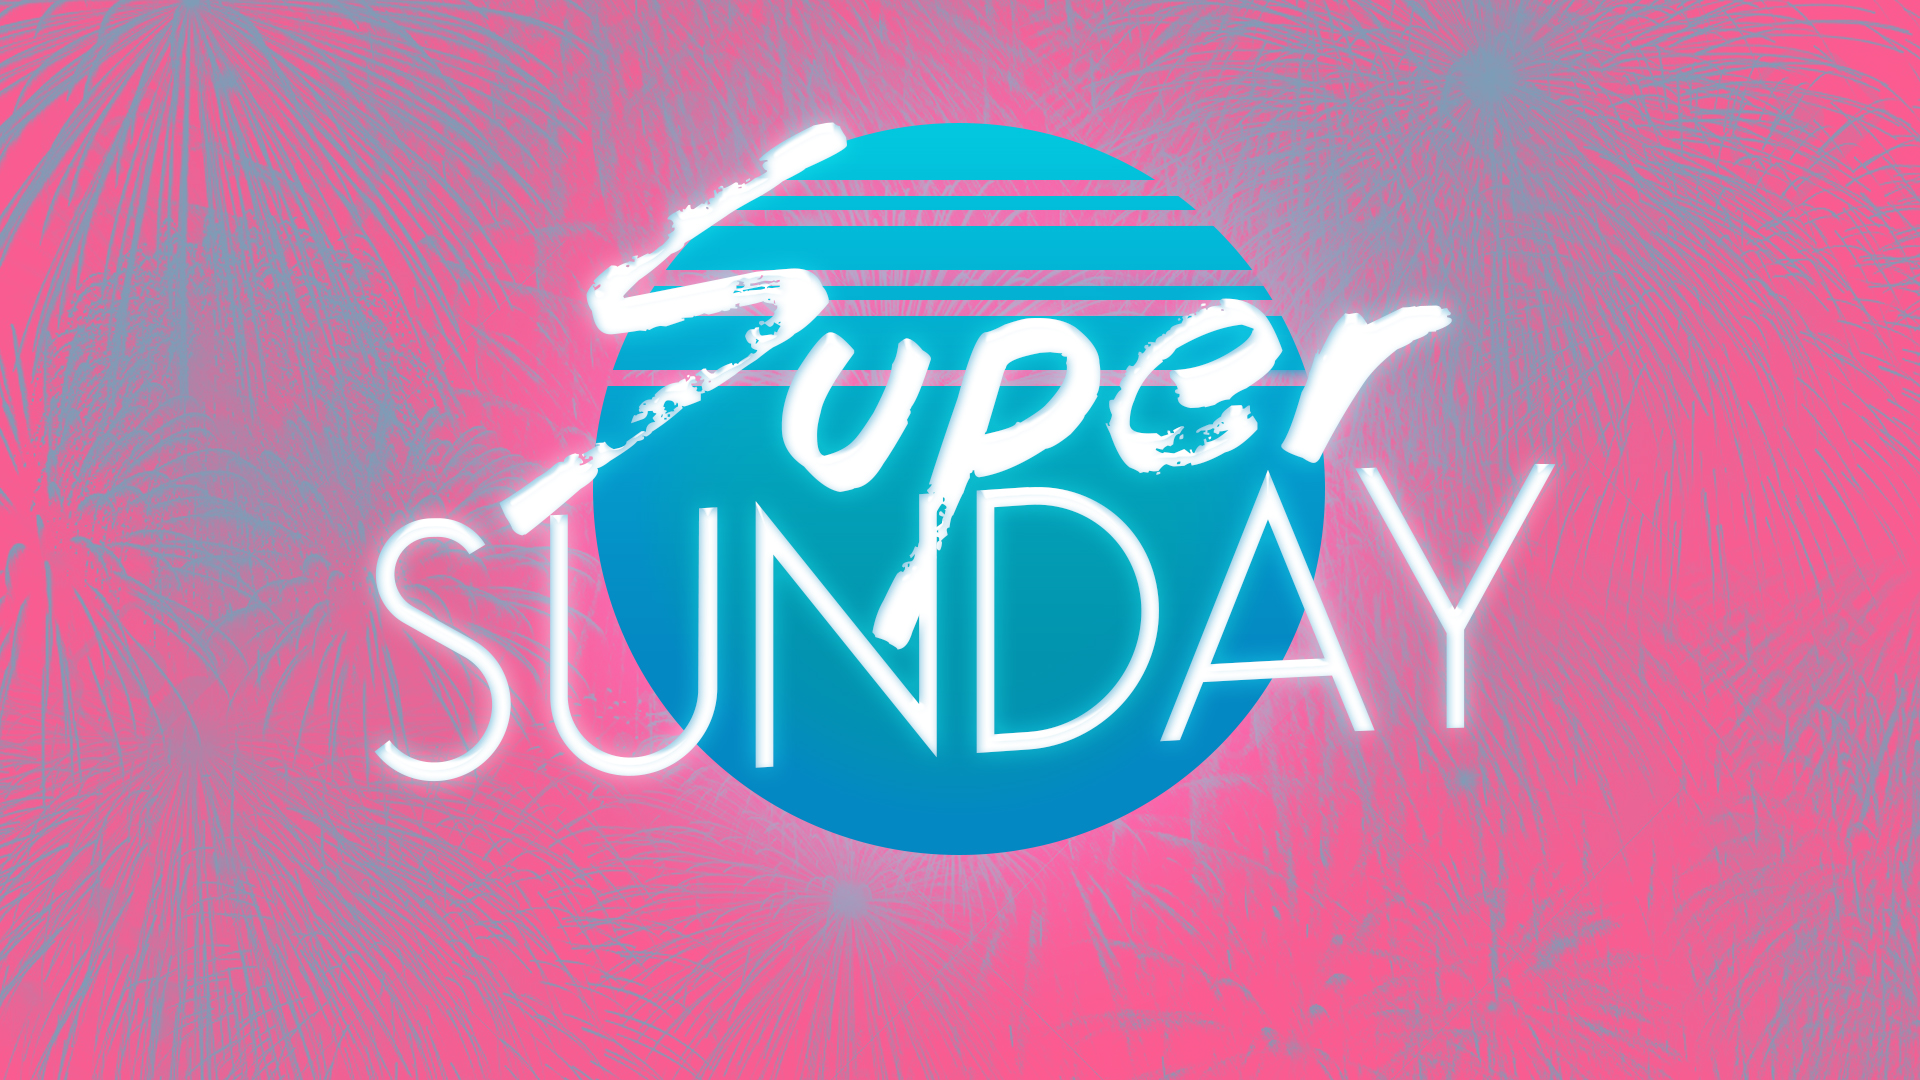 Super Sunday - Invite Power